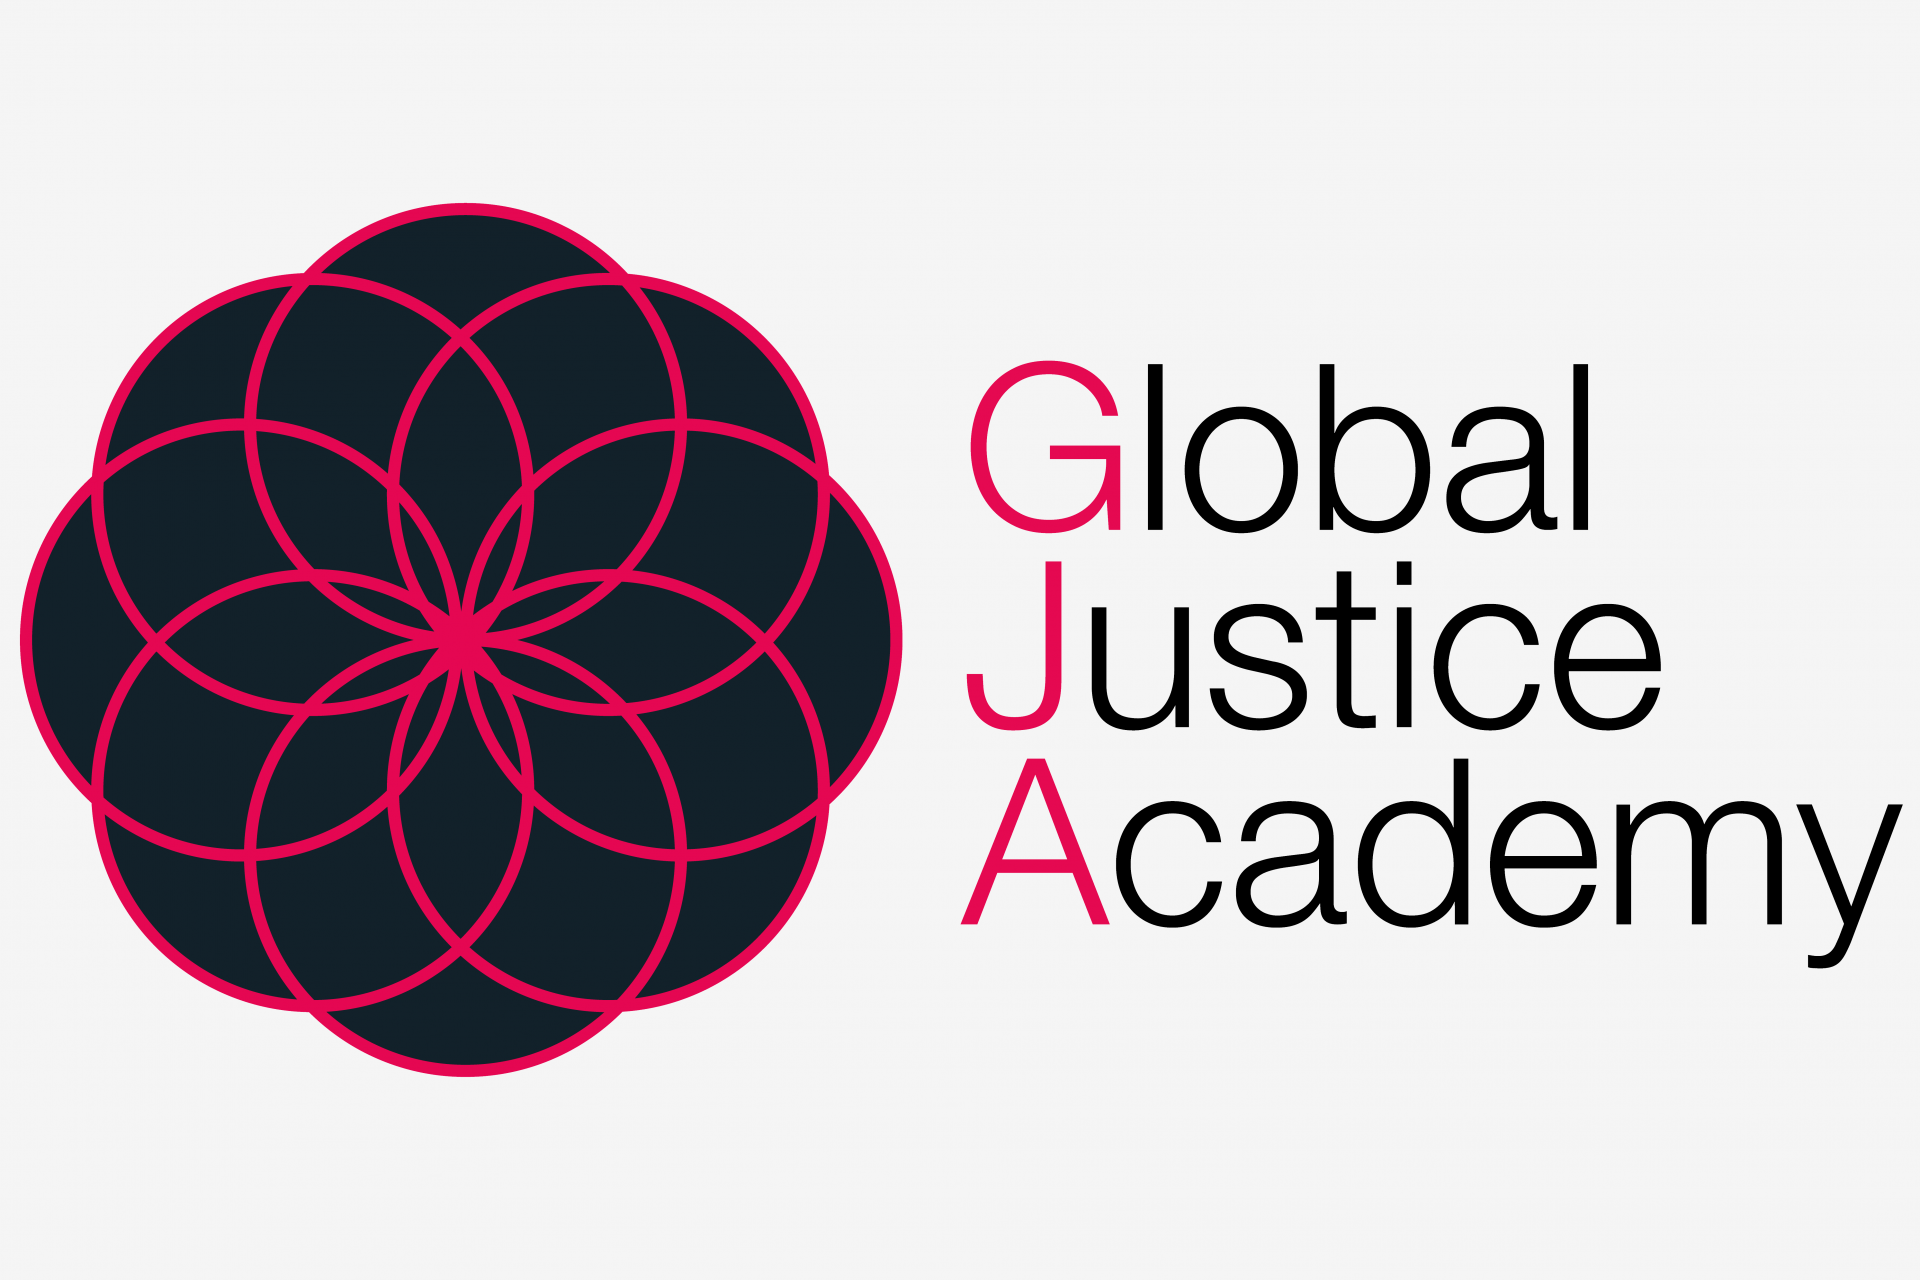 Global Justice Academy logo